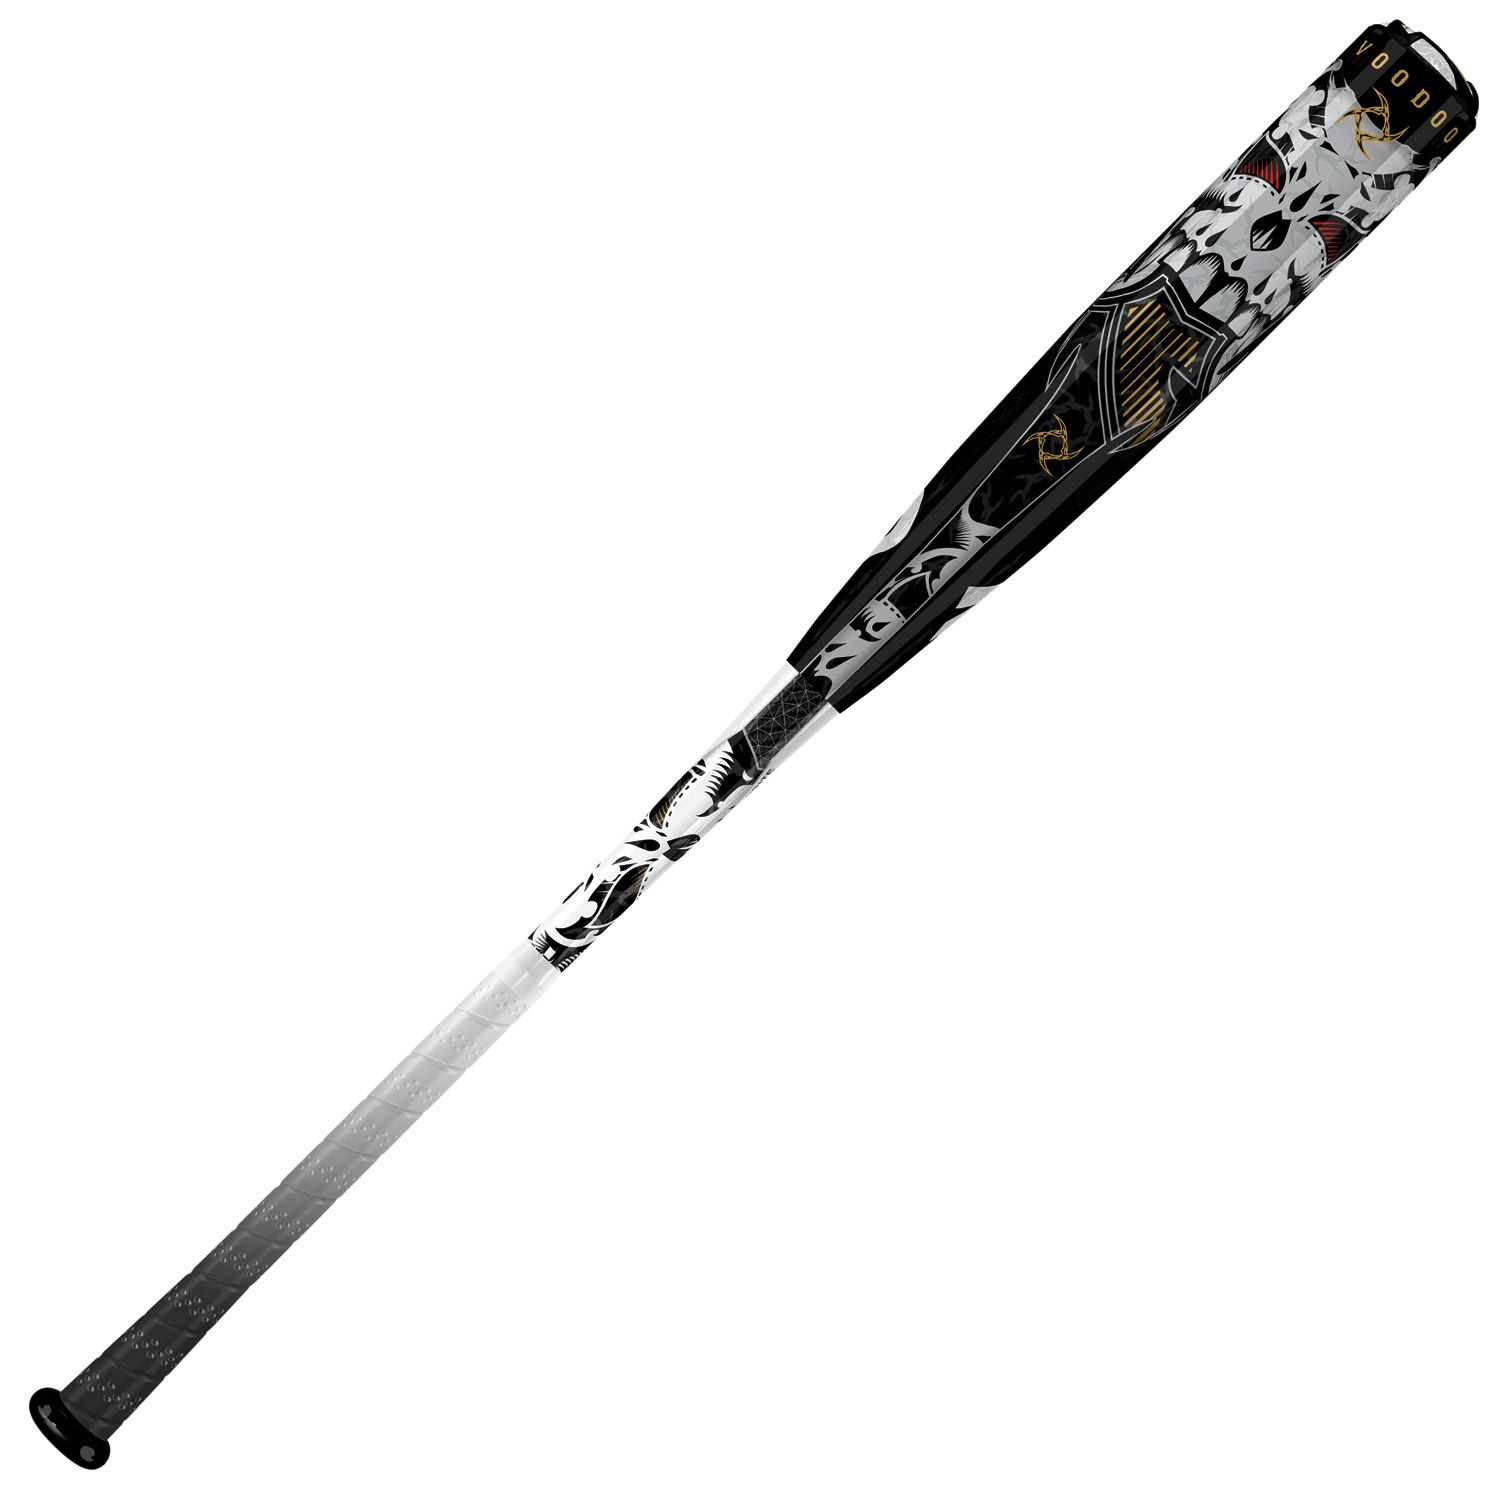 DeMarini Voodoo Baseball Bat Bats